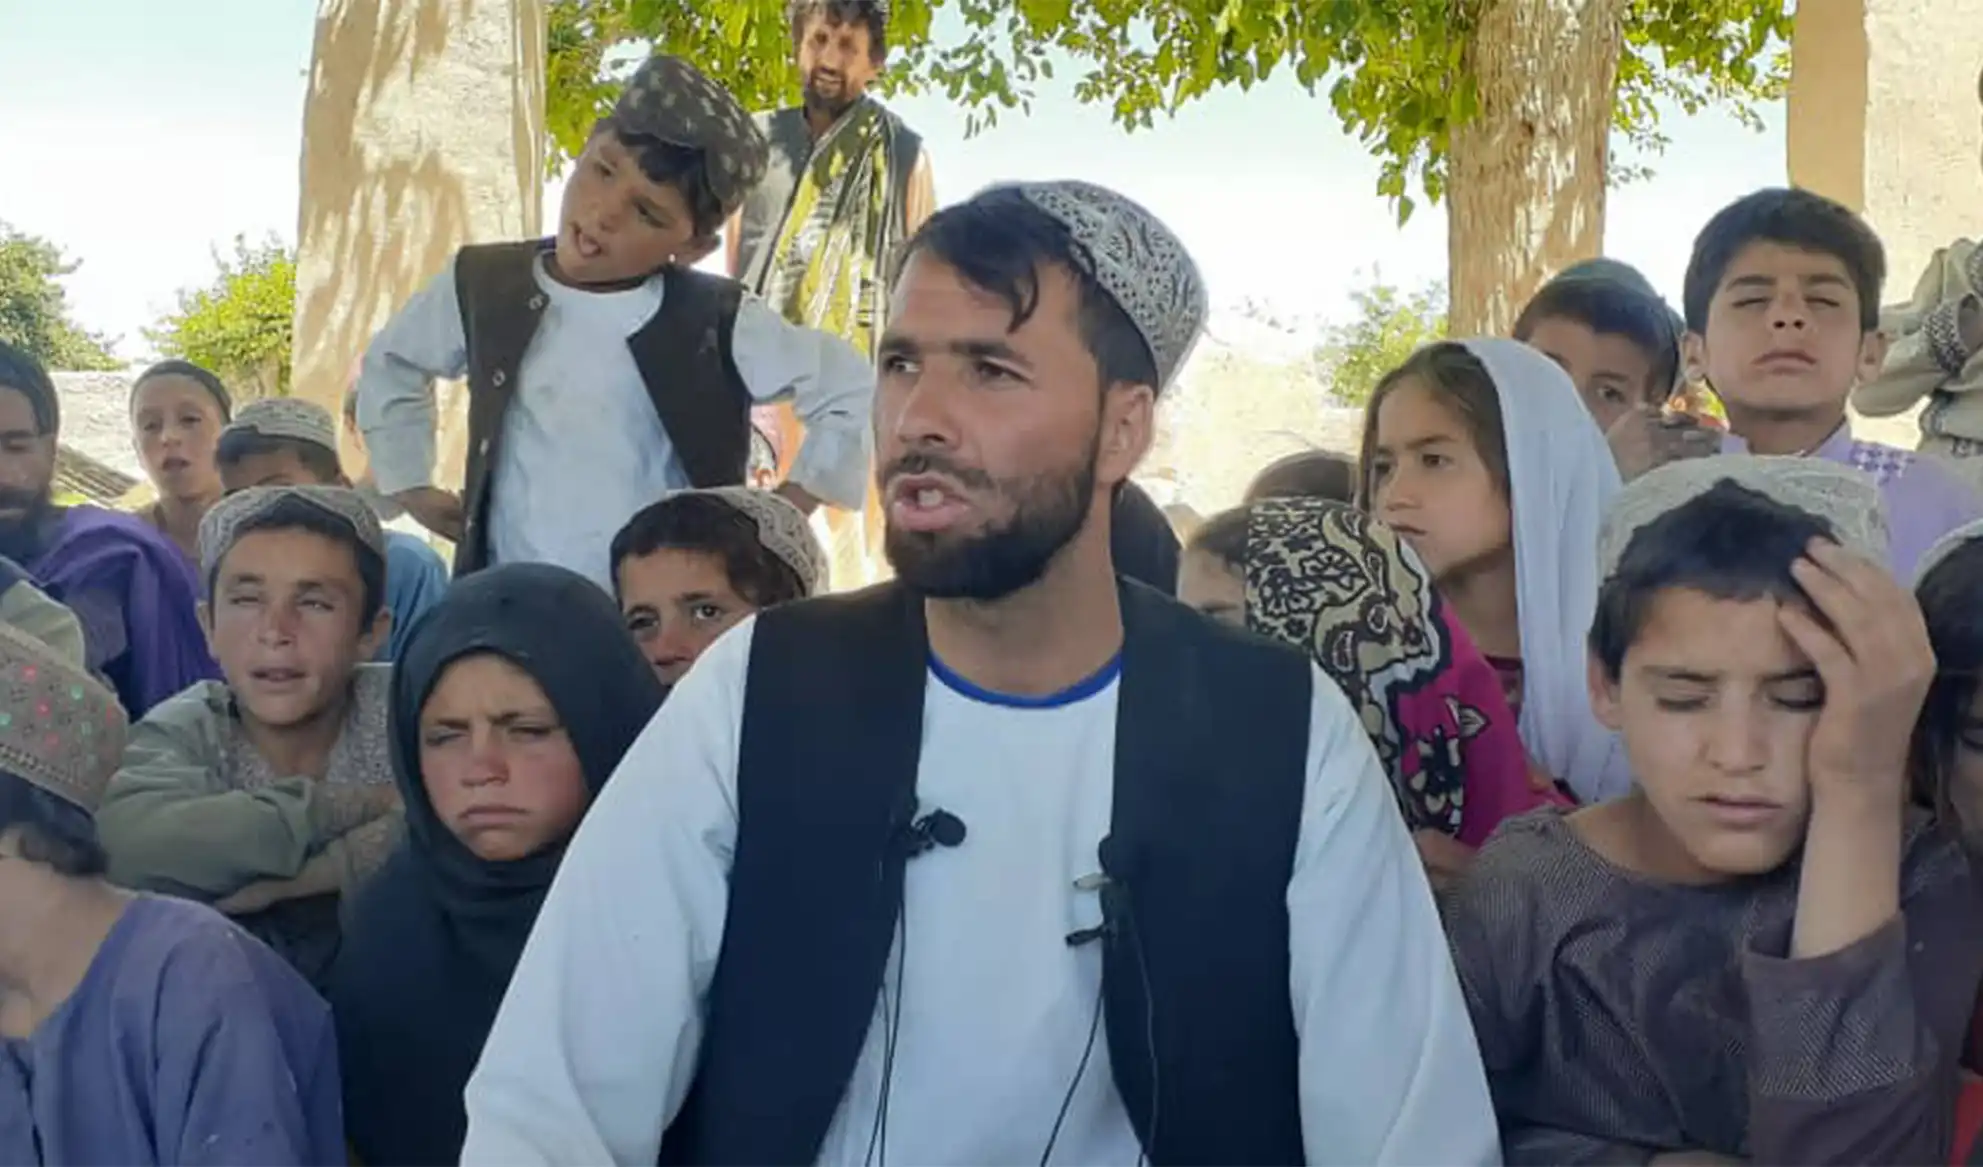 Uruzgan: Half of Muhauddin villagers are disabled